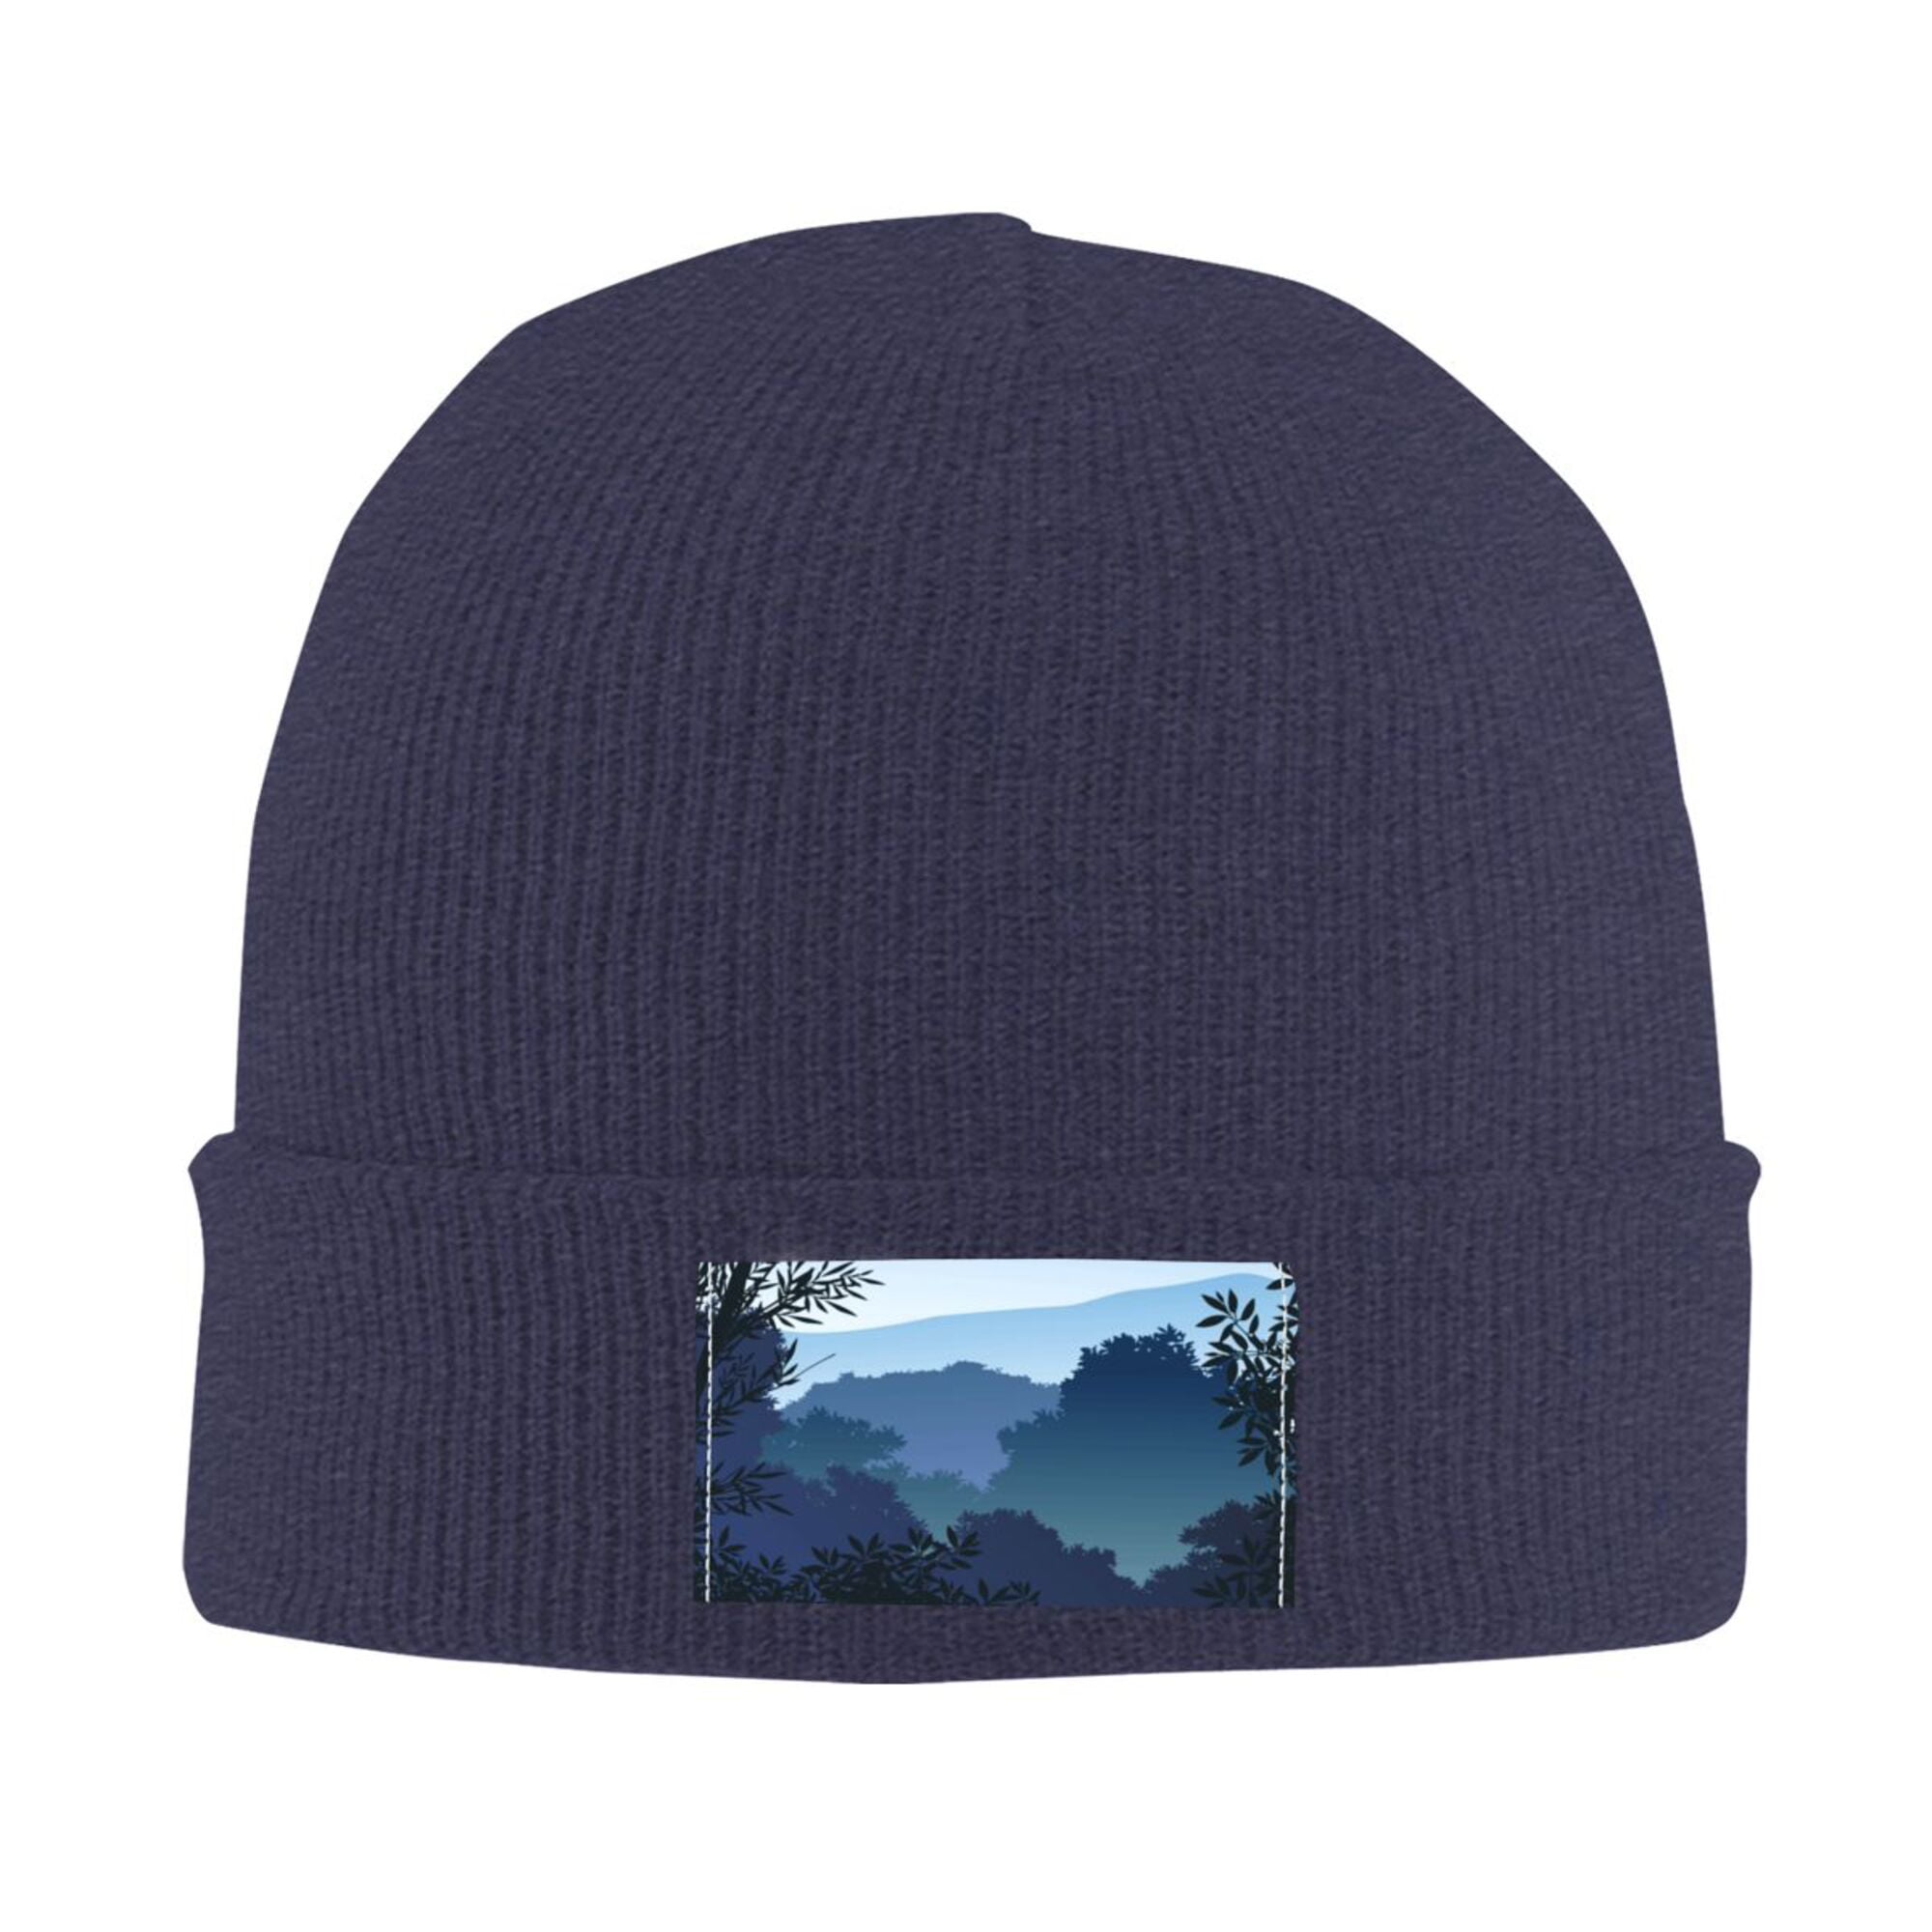 ZICANCN Knit Beanie Hat-Forest Winter Tree Winter Cap Soft Warm Classic Hats  for Men Women Landscape Nature Mountain Sky 